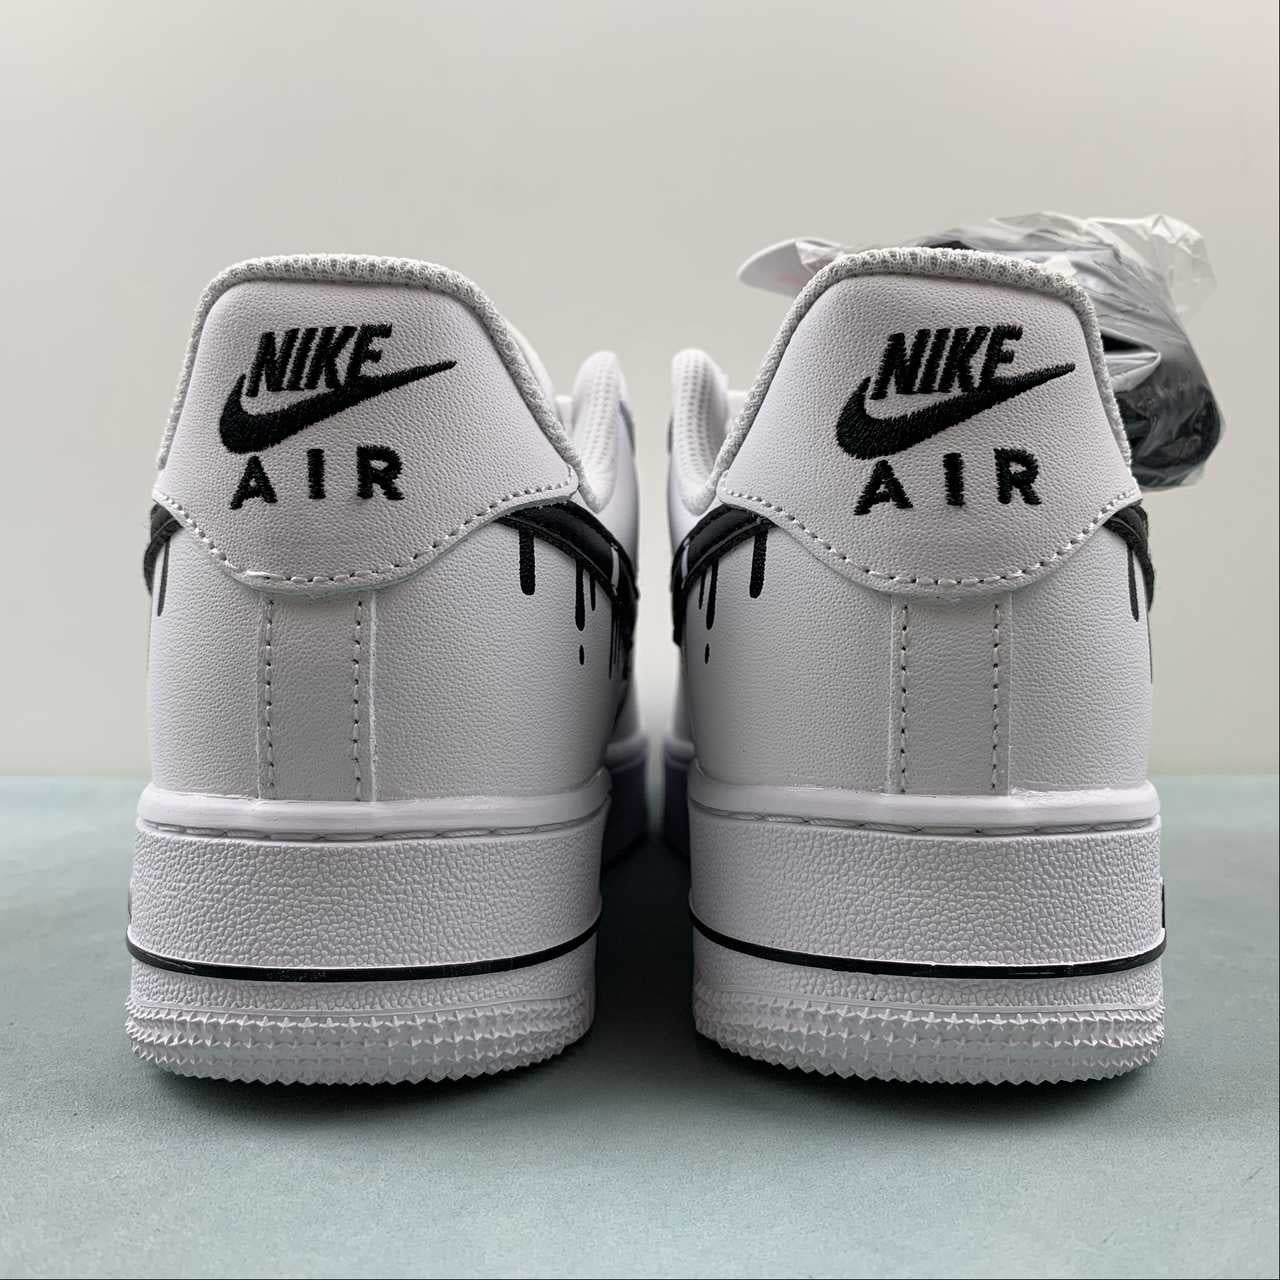 Nike airforce A1 les chaussures goutte à goutte